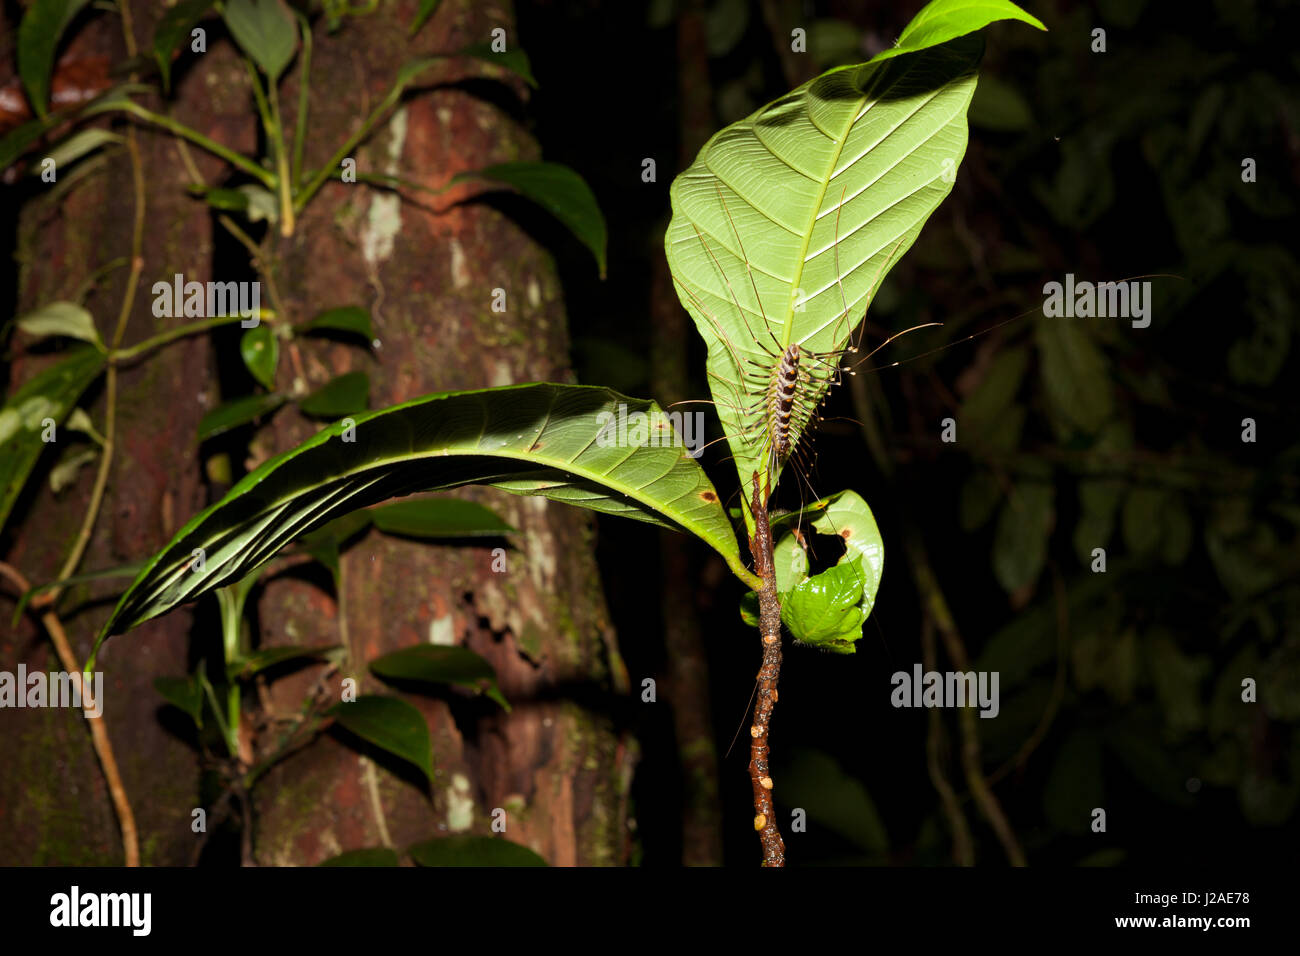 Long legged centipede under leaf Stock Photo